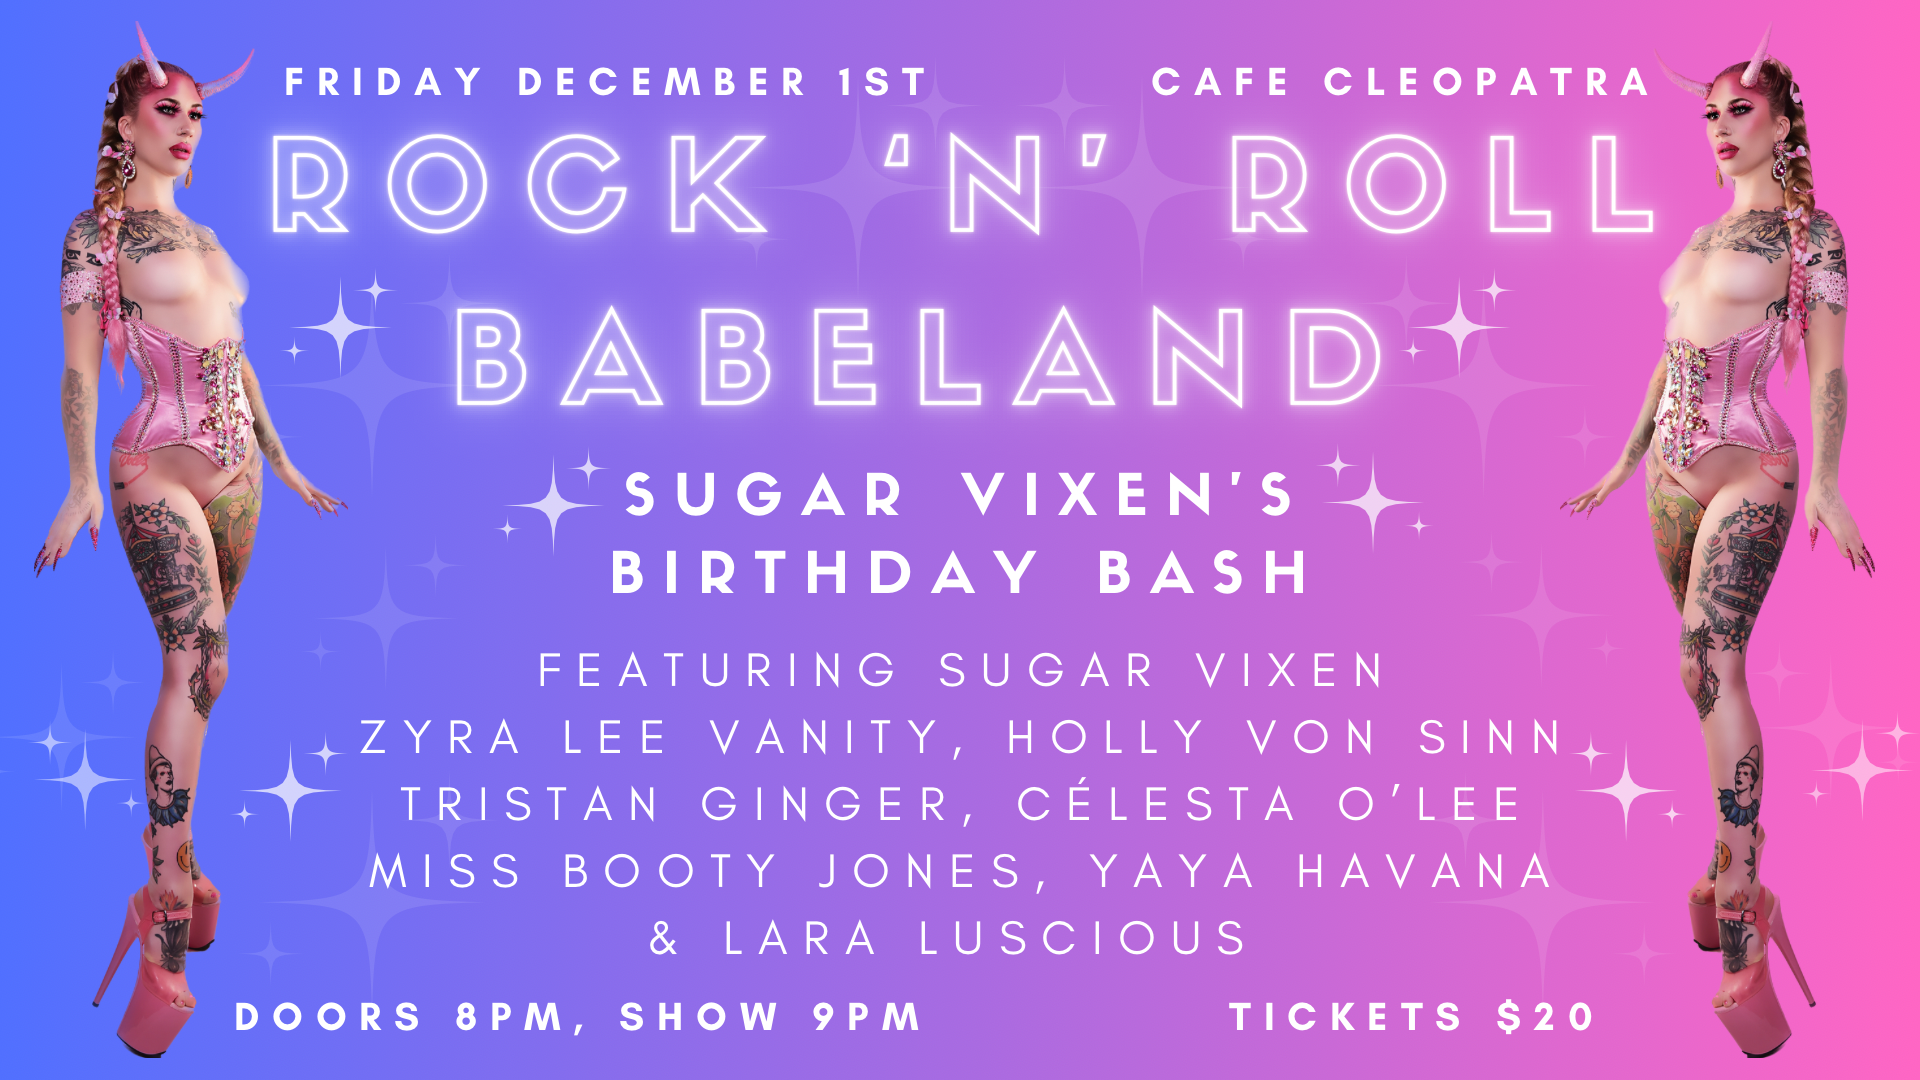 Rock ‘n’ Roll Babeland: Sugar Vixen’s Birthday Bash